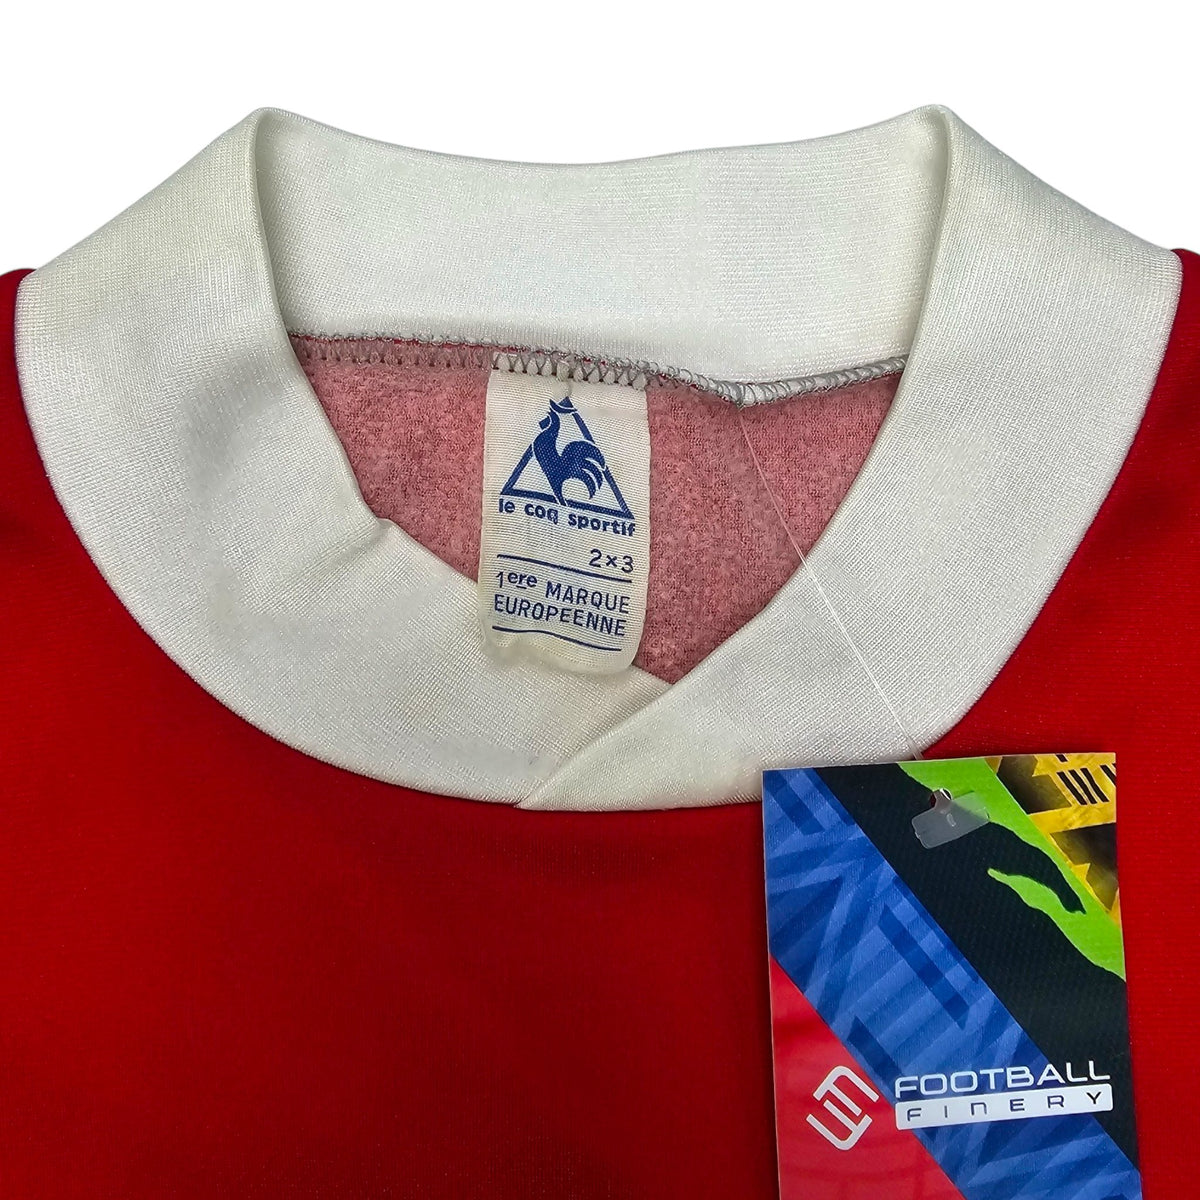 80s/90s Vintage Football Shirt (S) Le Coq Sportif - Football Finery - FF202350